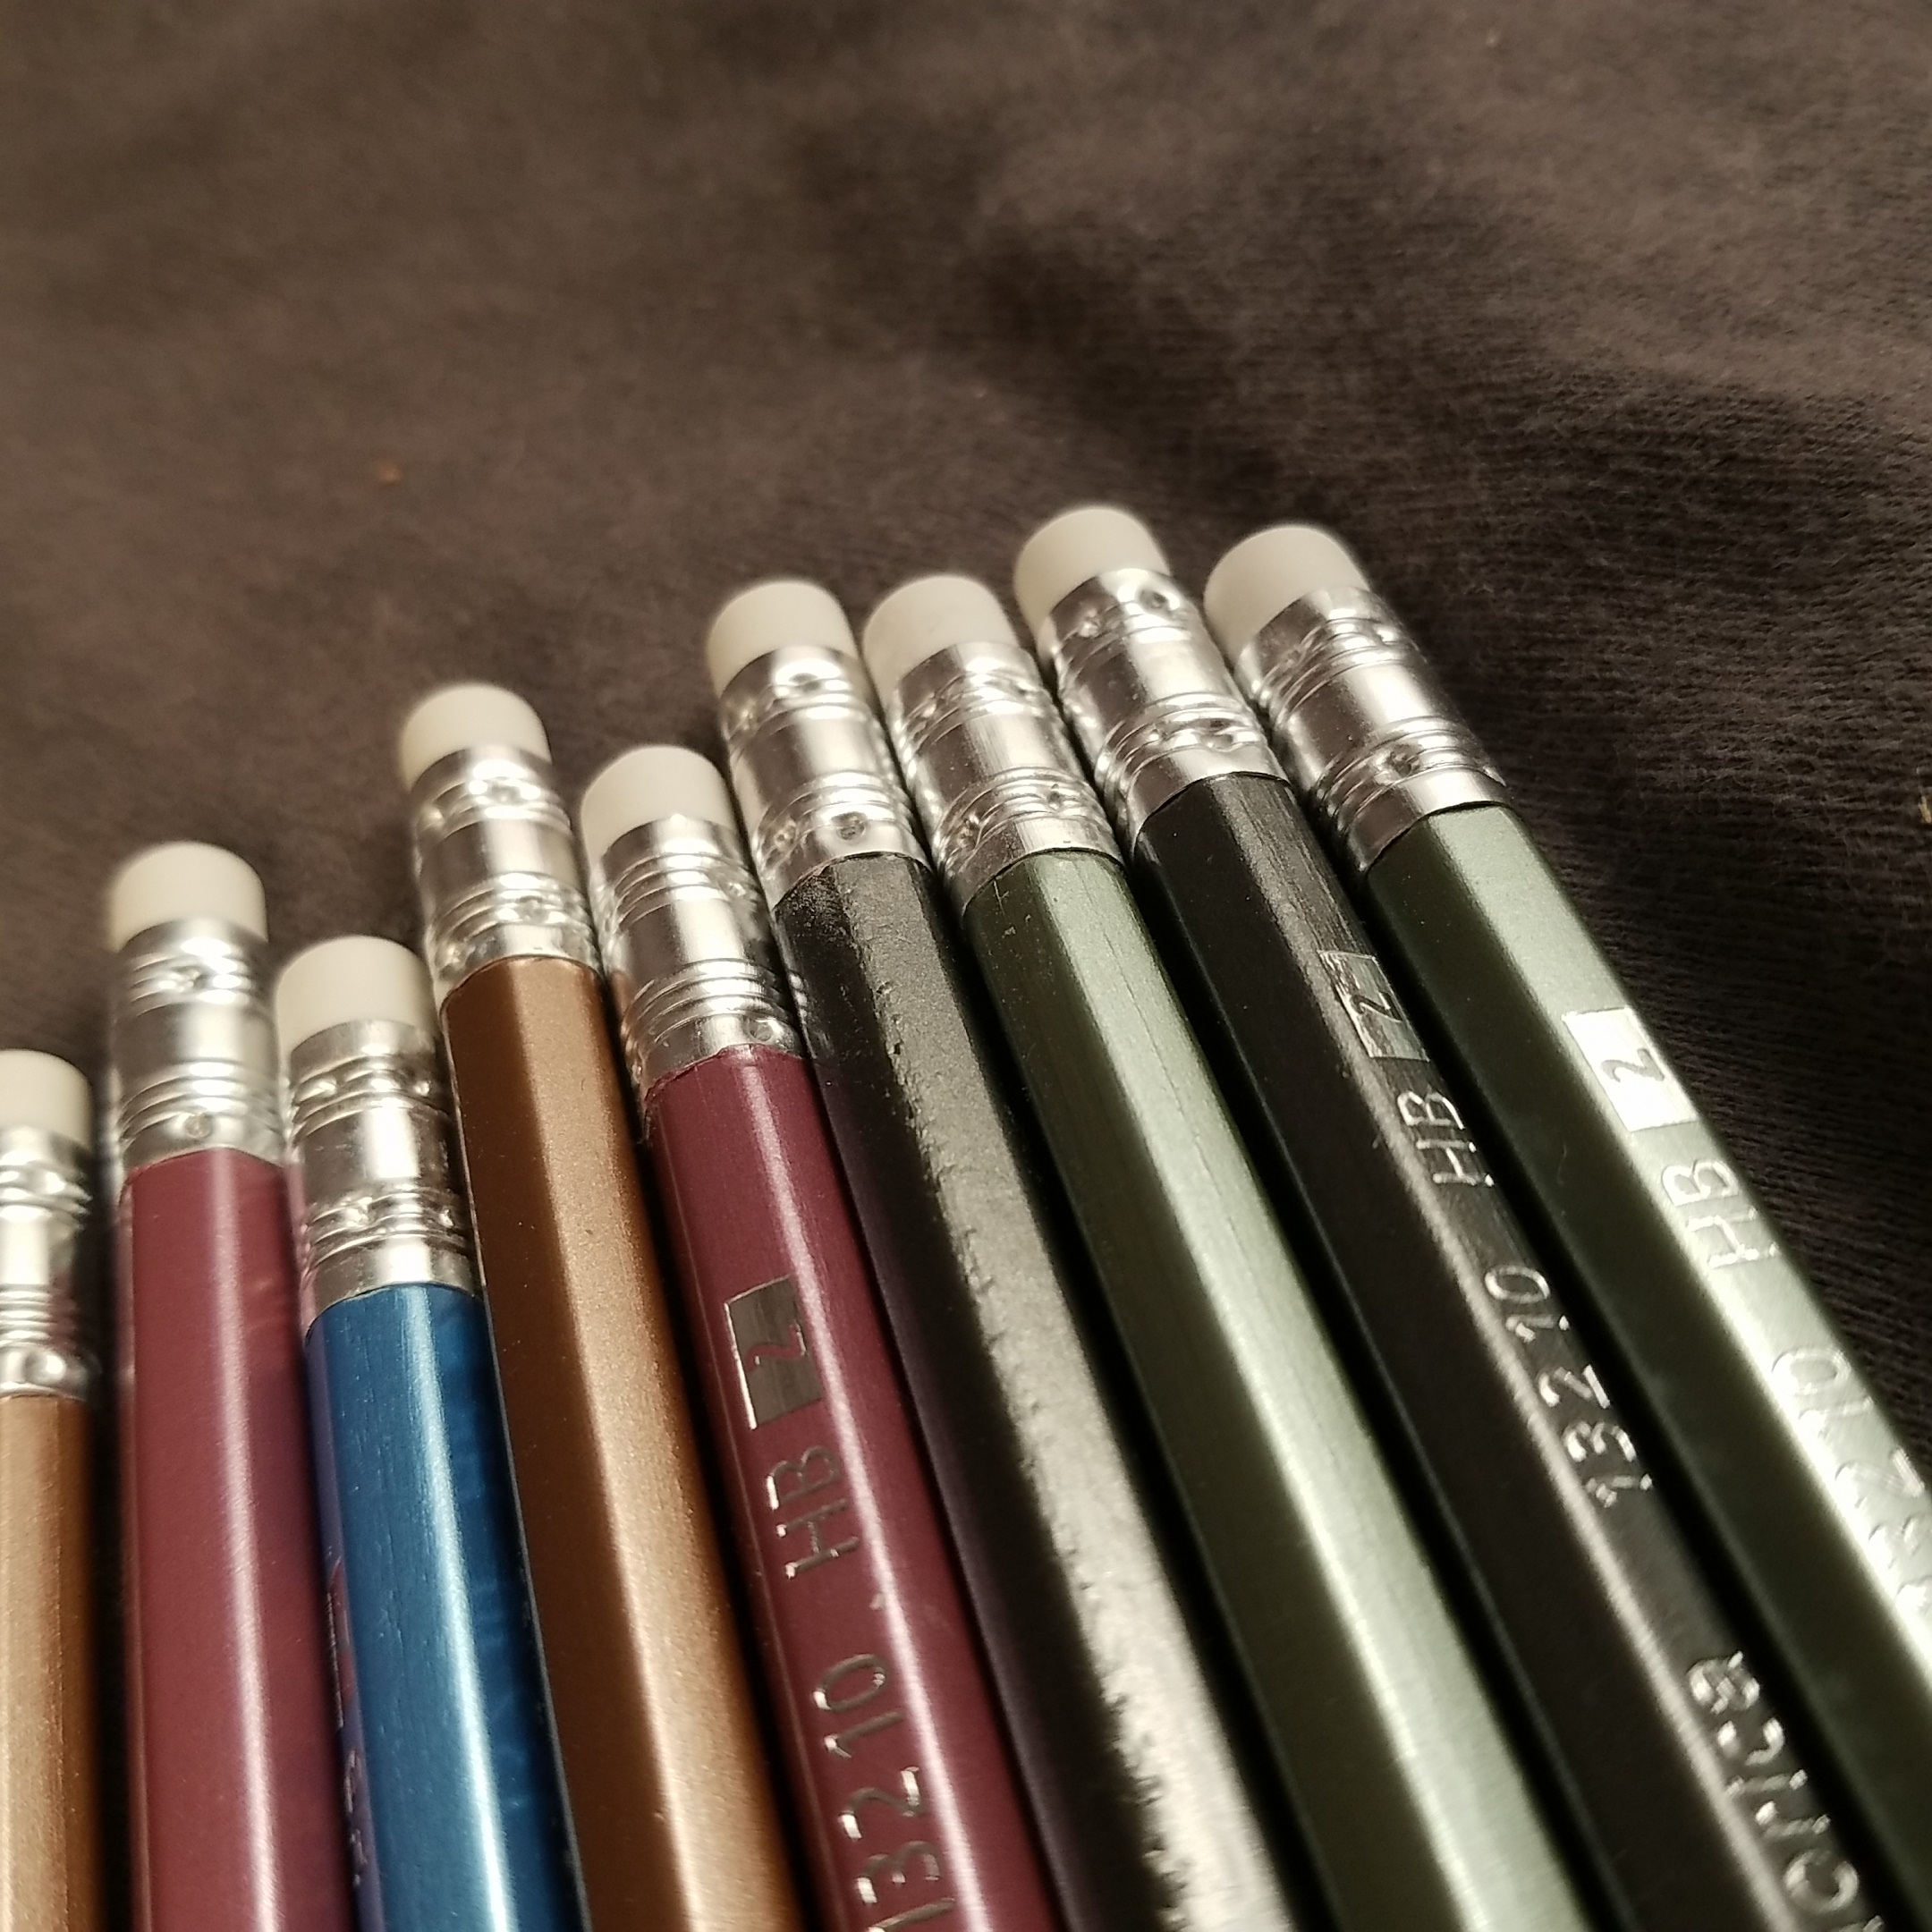 Pencil Review: Staedtler Noris (HB) – Polar Pencil Pusher